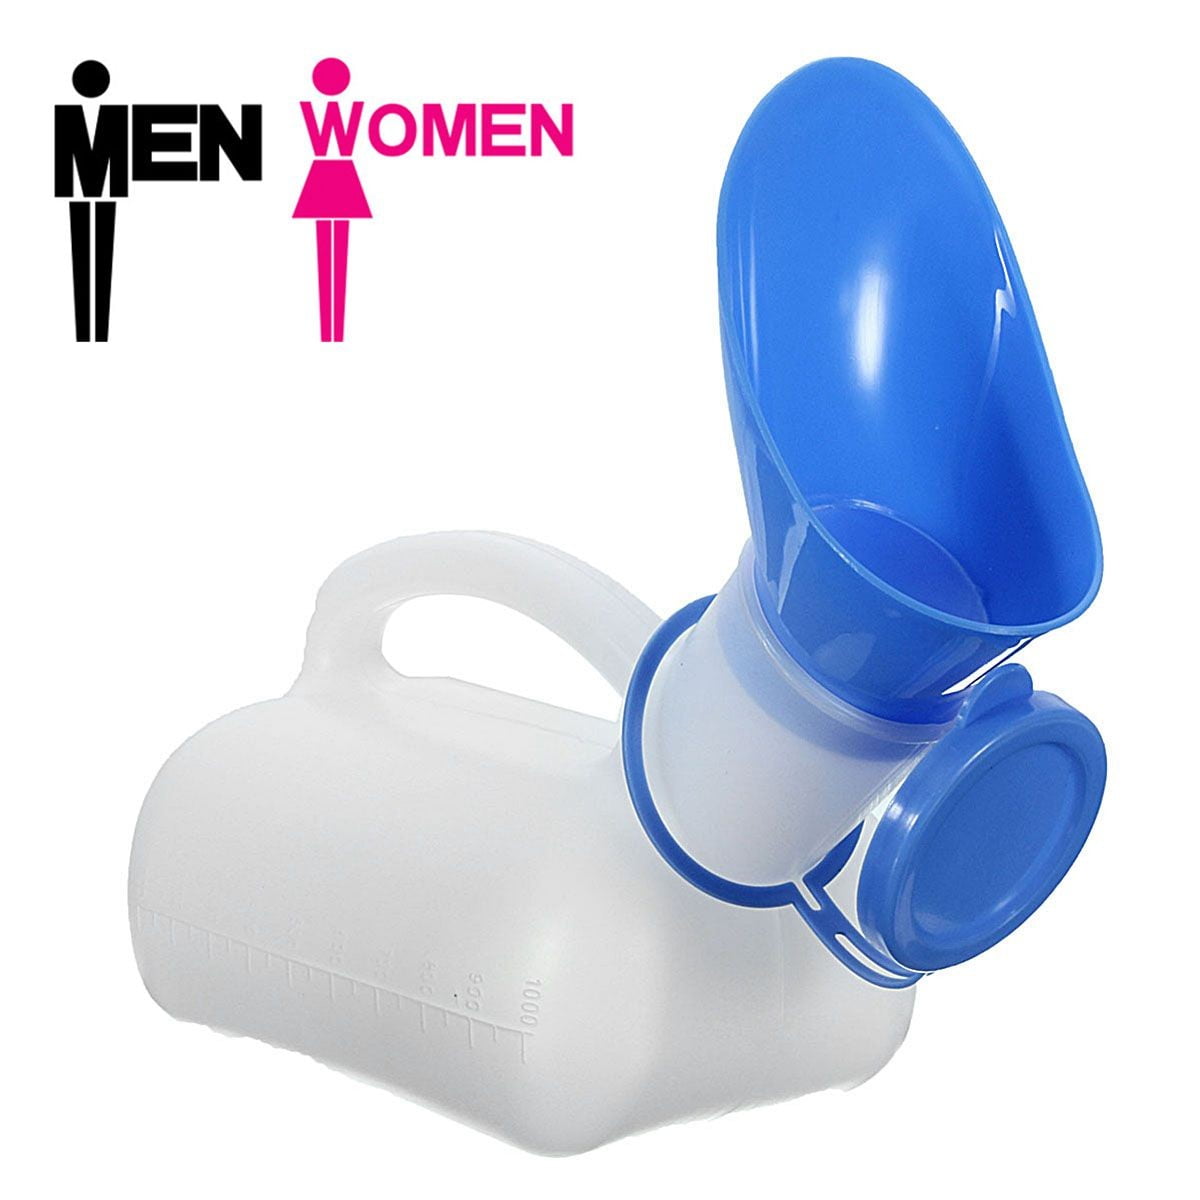 HAKACC Female Women Urinal Camping Travel Toilet Device,Purple 